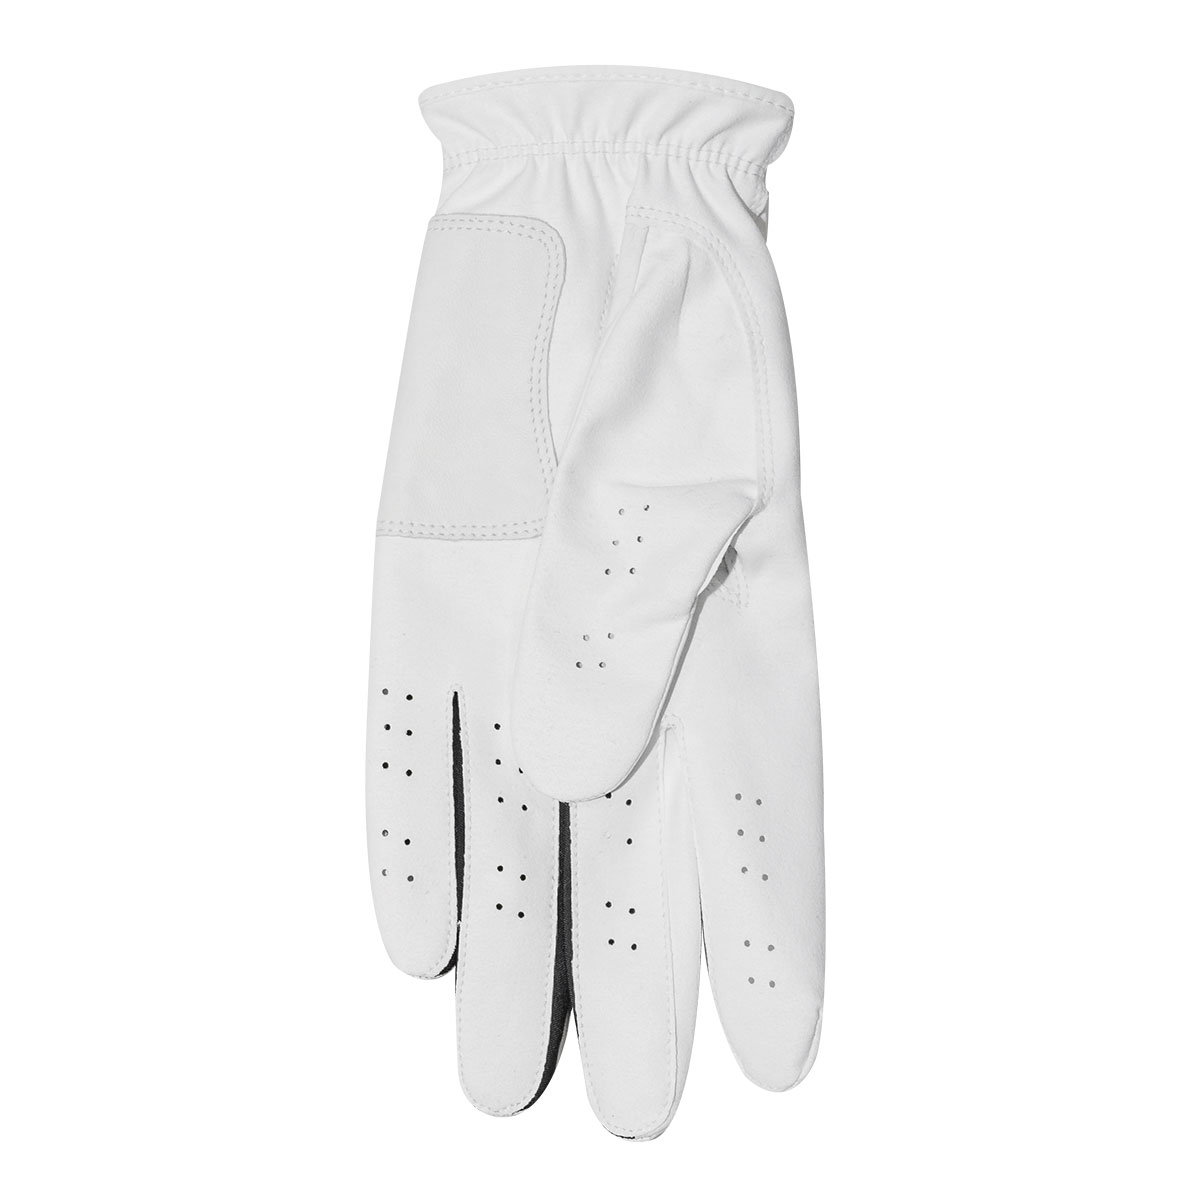 Greg Norman Men's Golf Gloves - 2 Pack from american golf